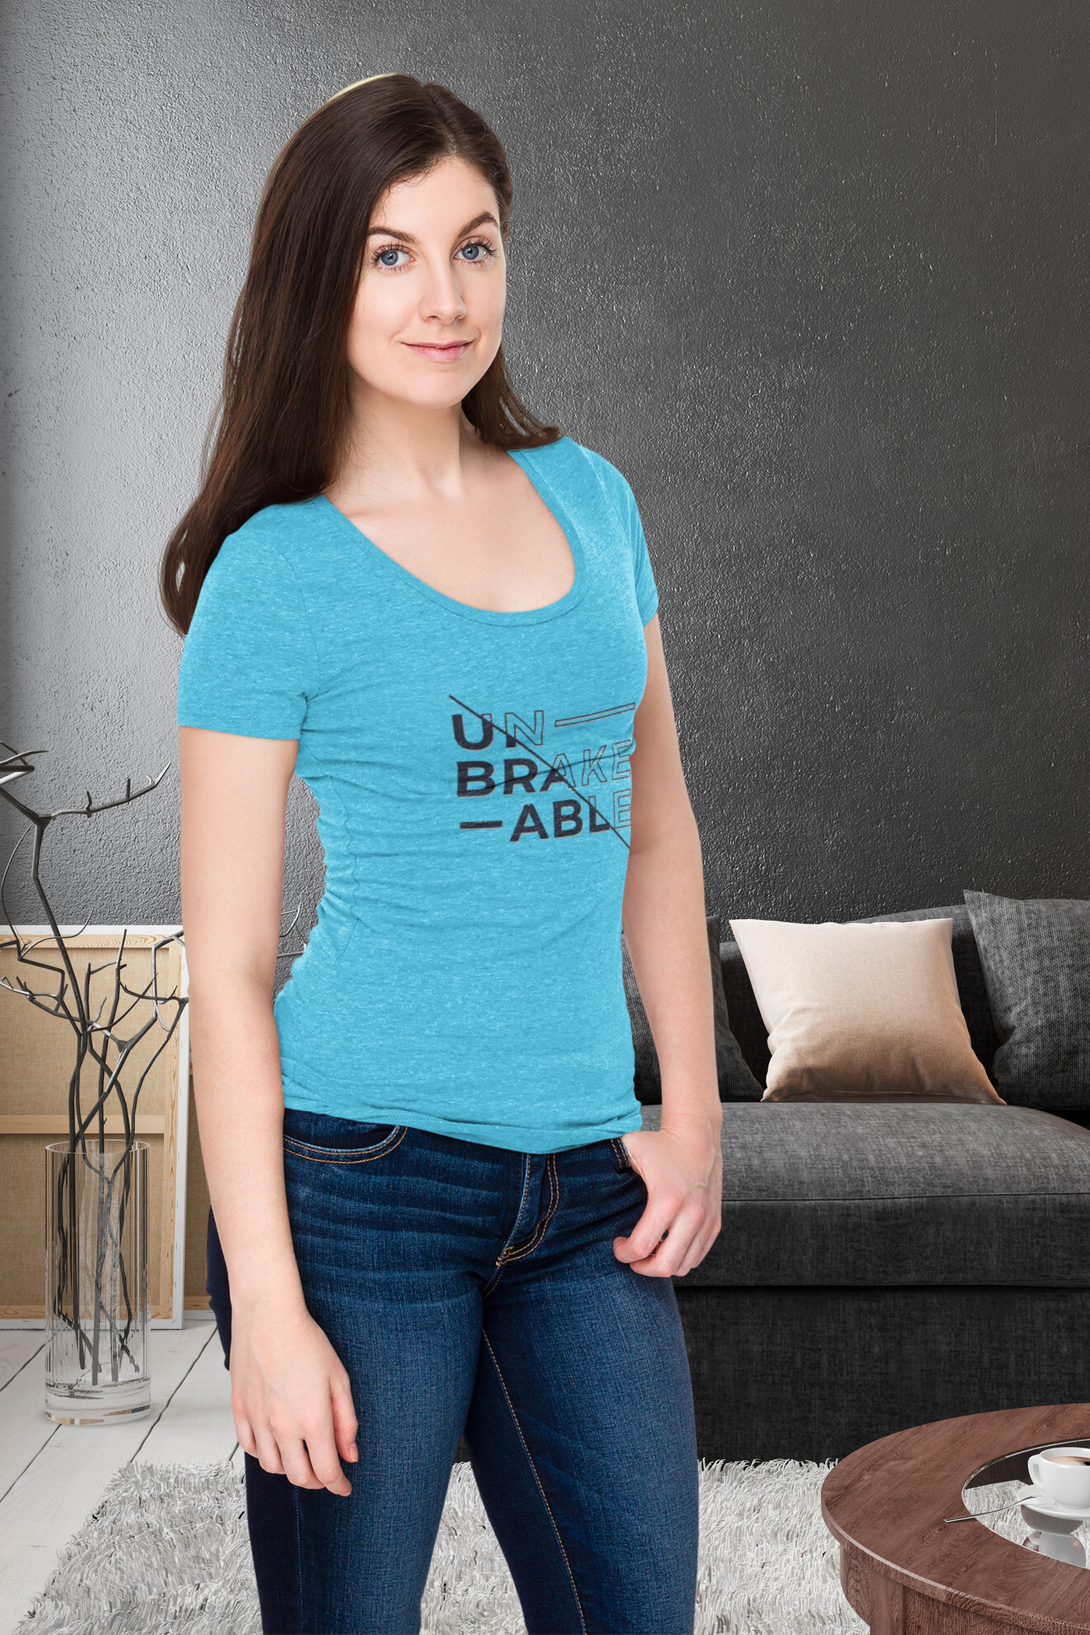 Unbreakable Printed Scoop Neck T-Shirt For Women - WowWaves - 5